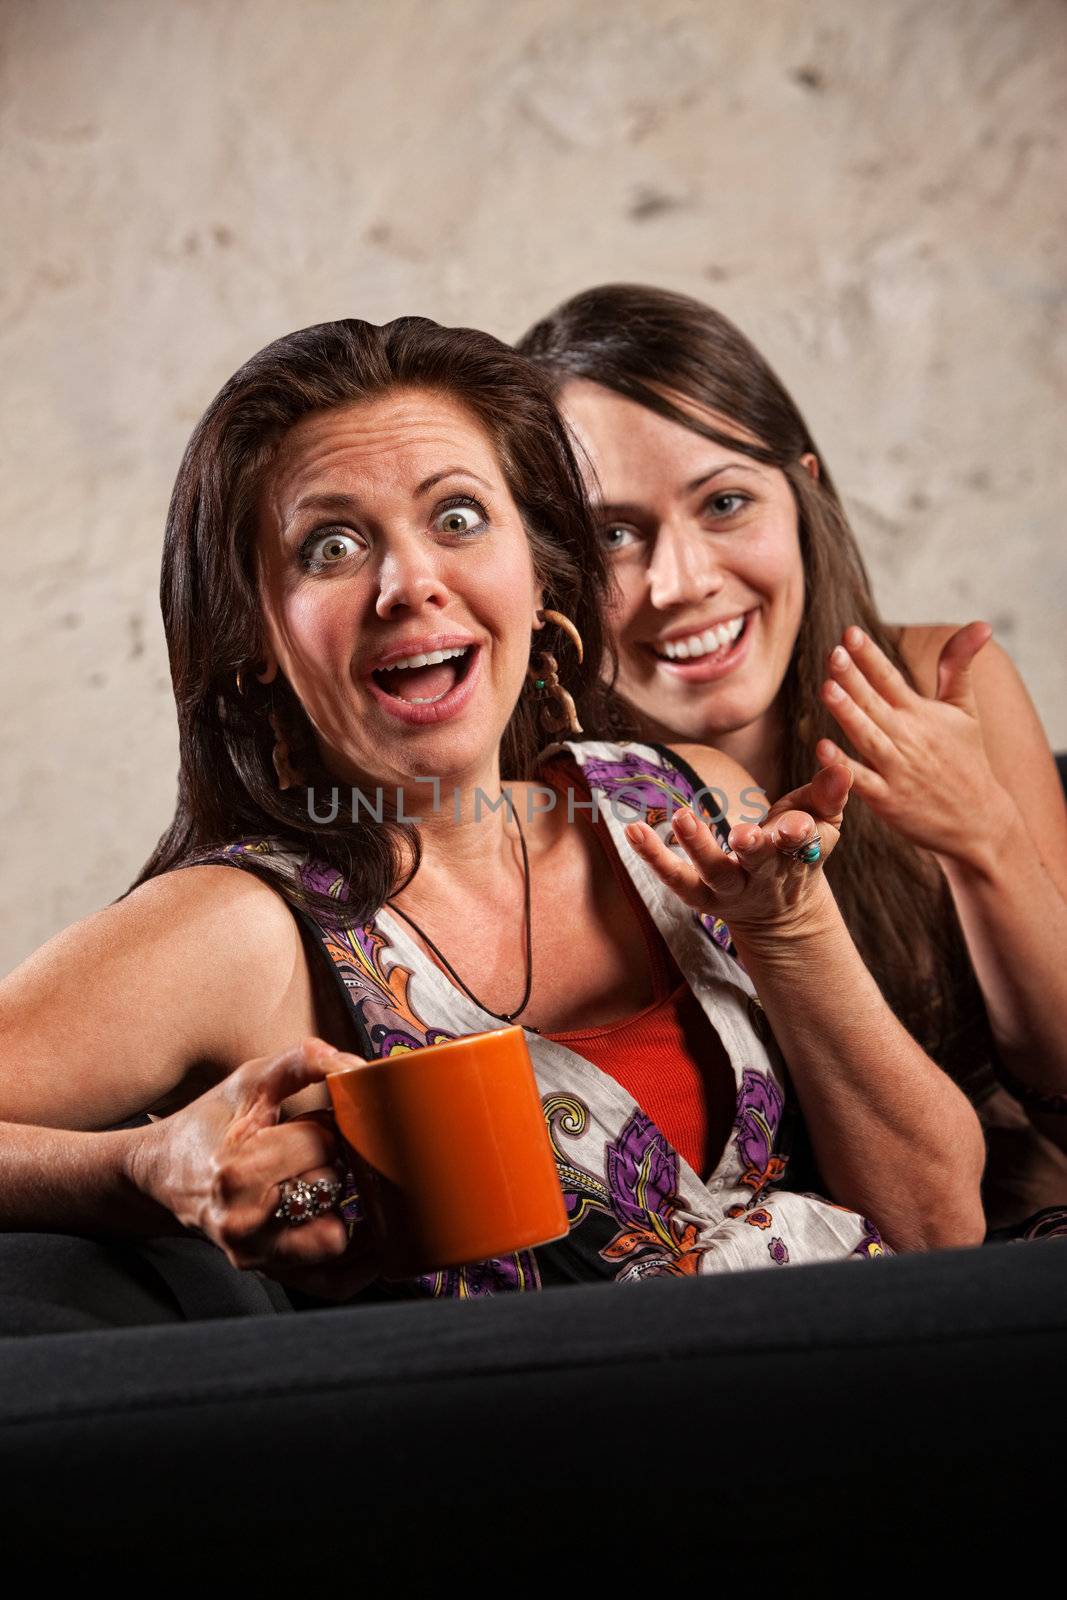 Surprised Women Laughing by Creatista